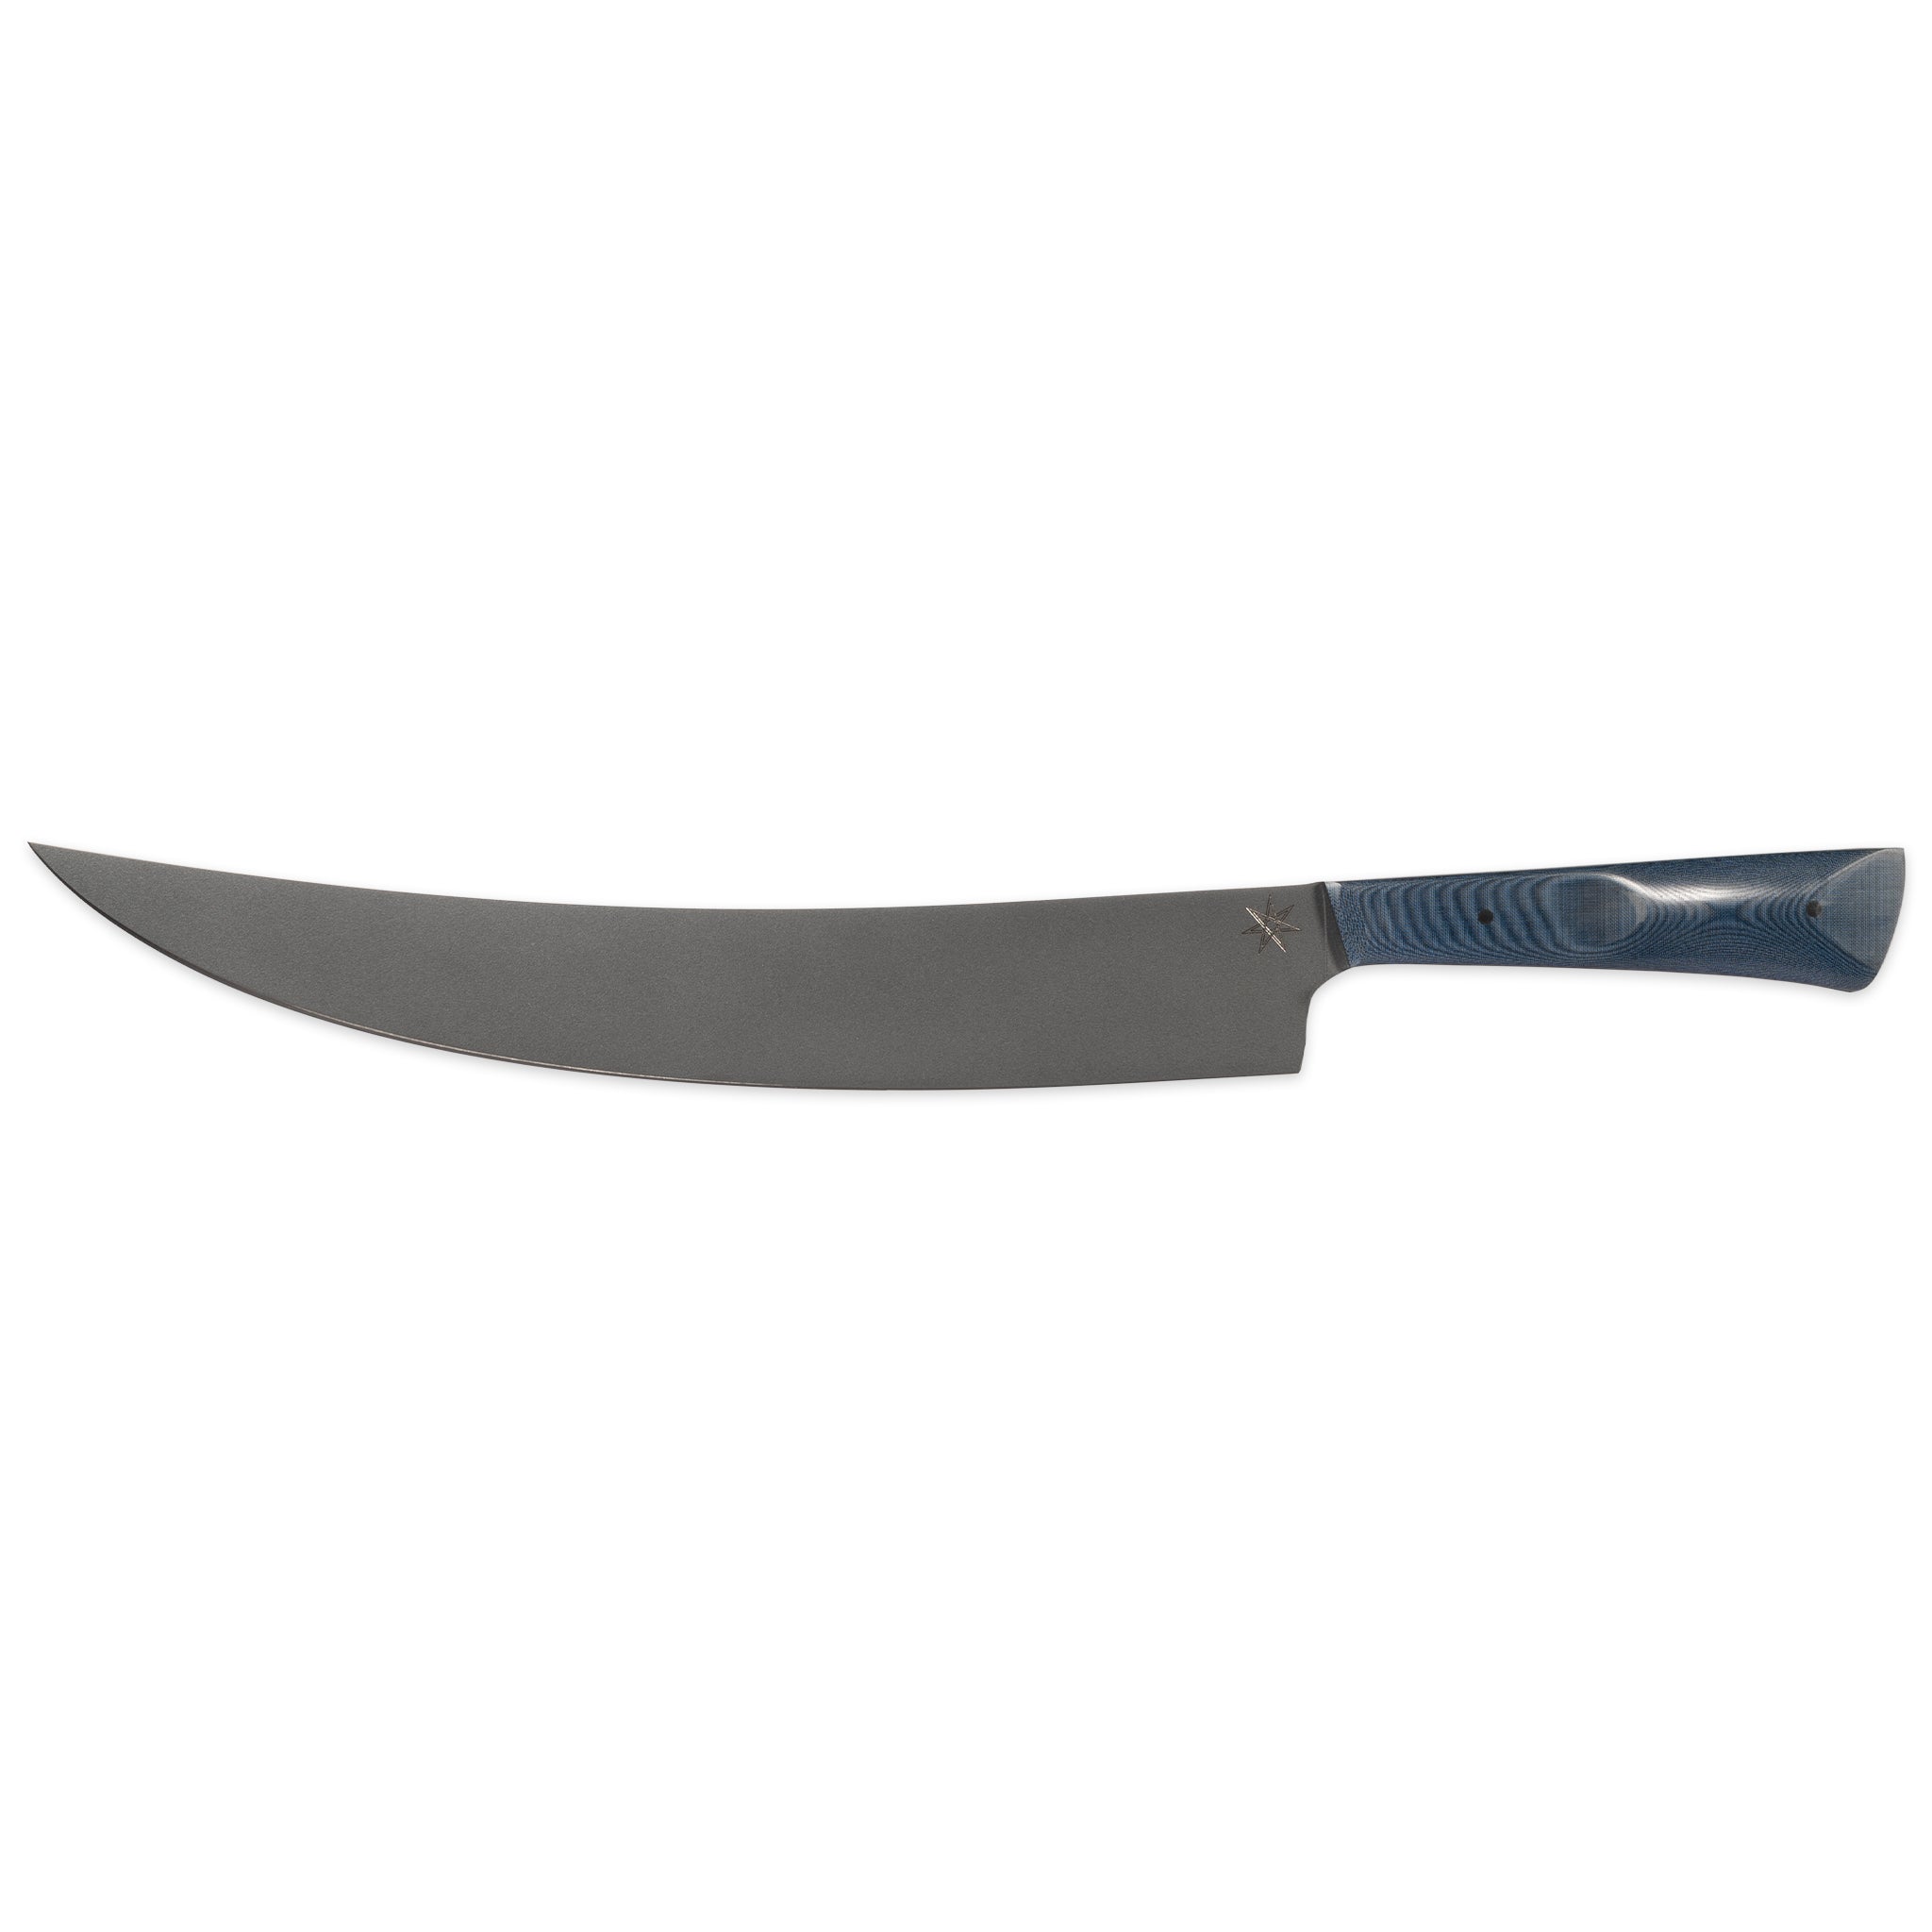 Town Cutler Scimitar Butcher Knife from eXo Blue Knife Line